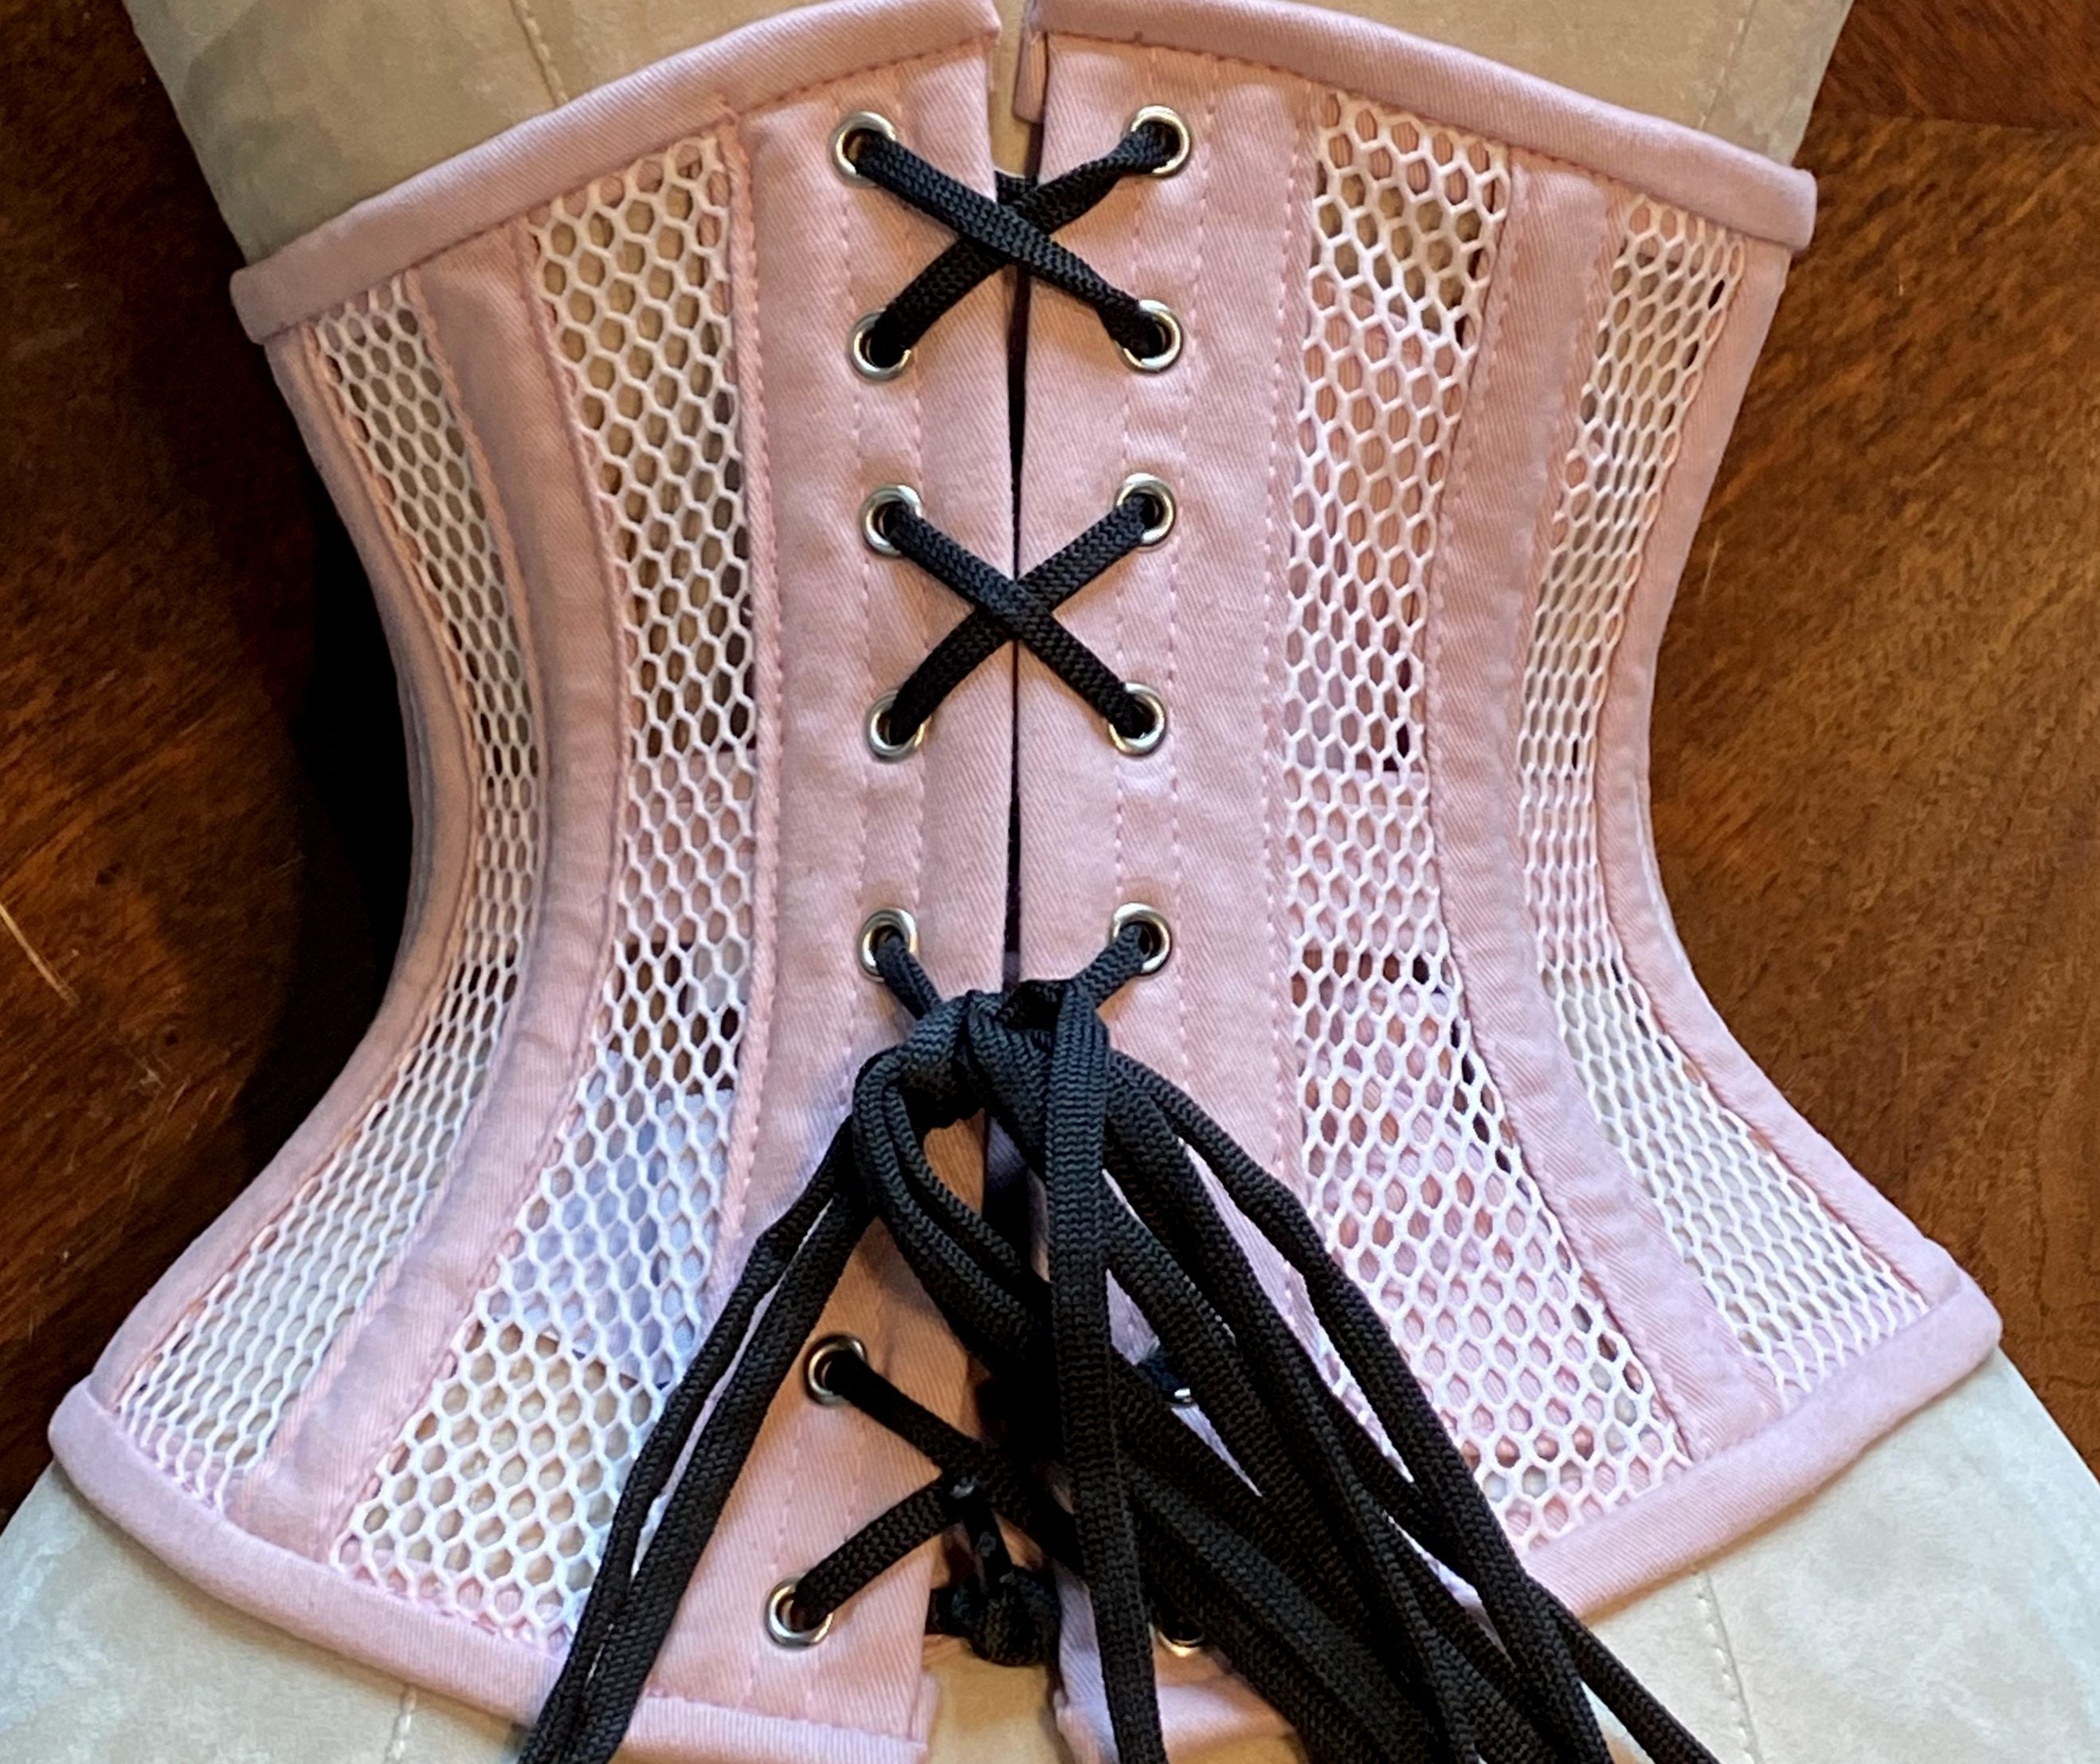 Real steel boned underbust underwear corset from transparent mesh